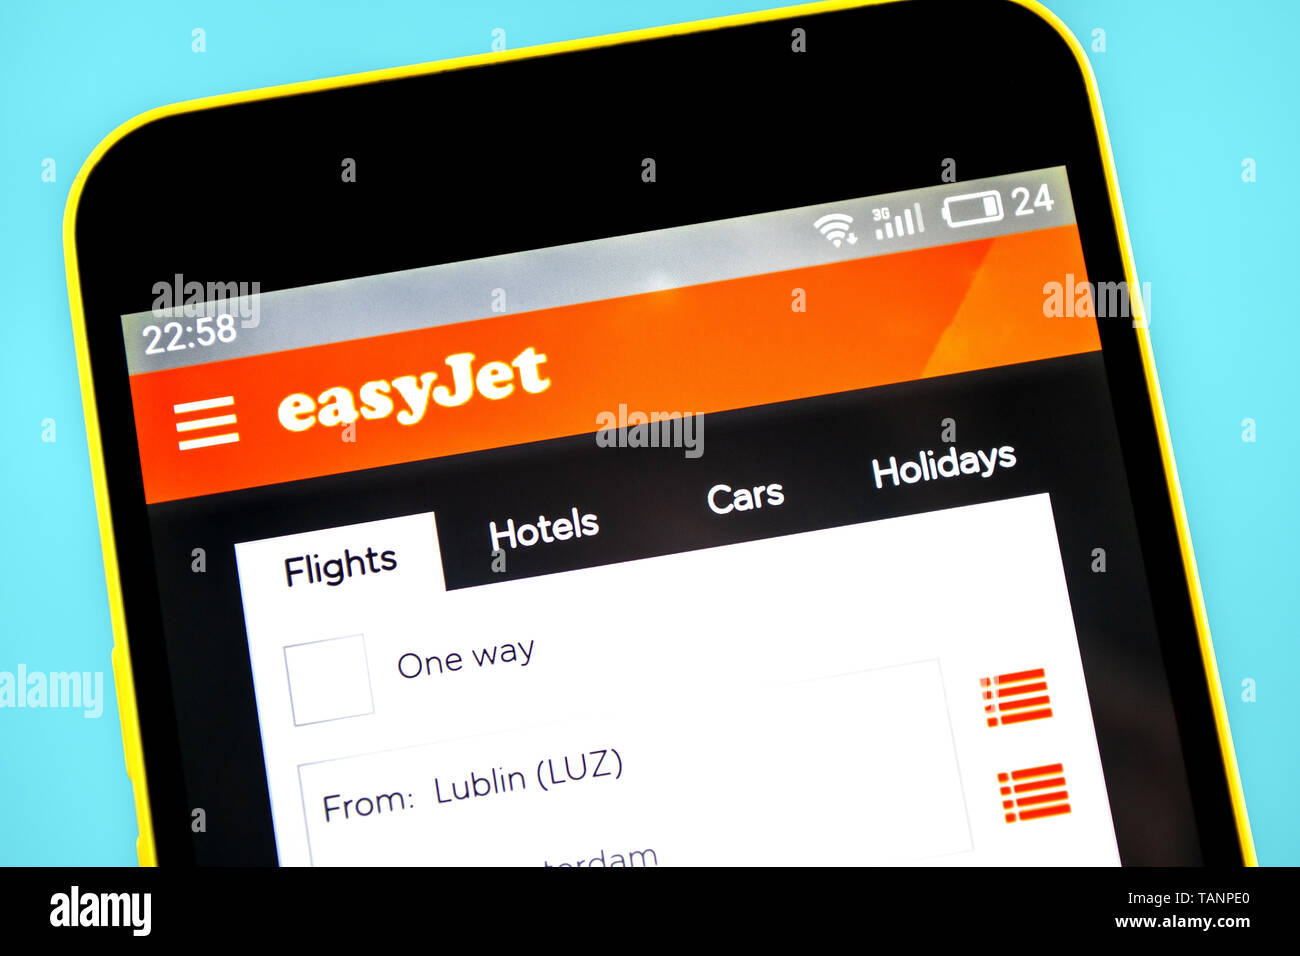 Berdyansk, Ukraine - 24 May 2019: EasyJet airline website homepage. EasyJet logo visible on the phone screen. Stock Photo